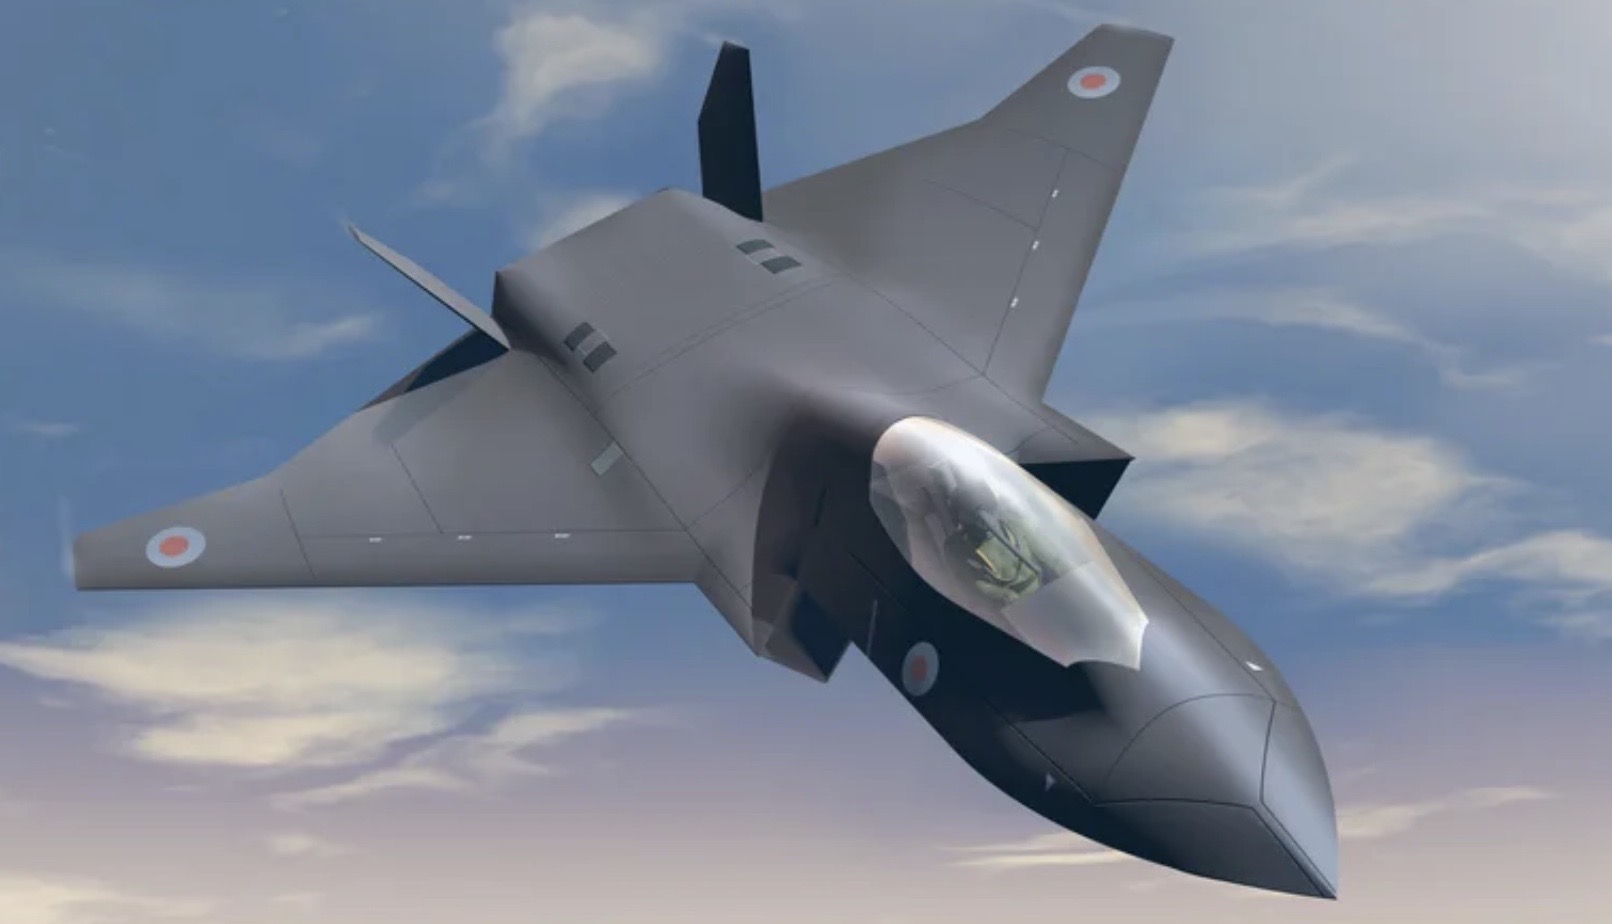 GCAP: Crosetto は、2035 年に新しい第 XNUMX 世代戦闘機を飛ばすため、英国と日本の国防長官との三国間協定のために日本に飛びます。